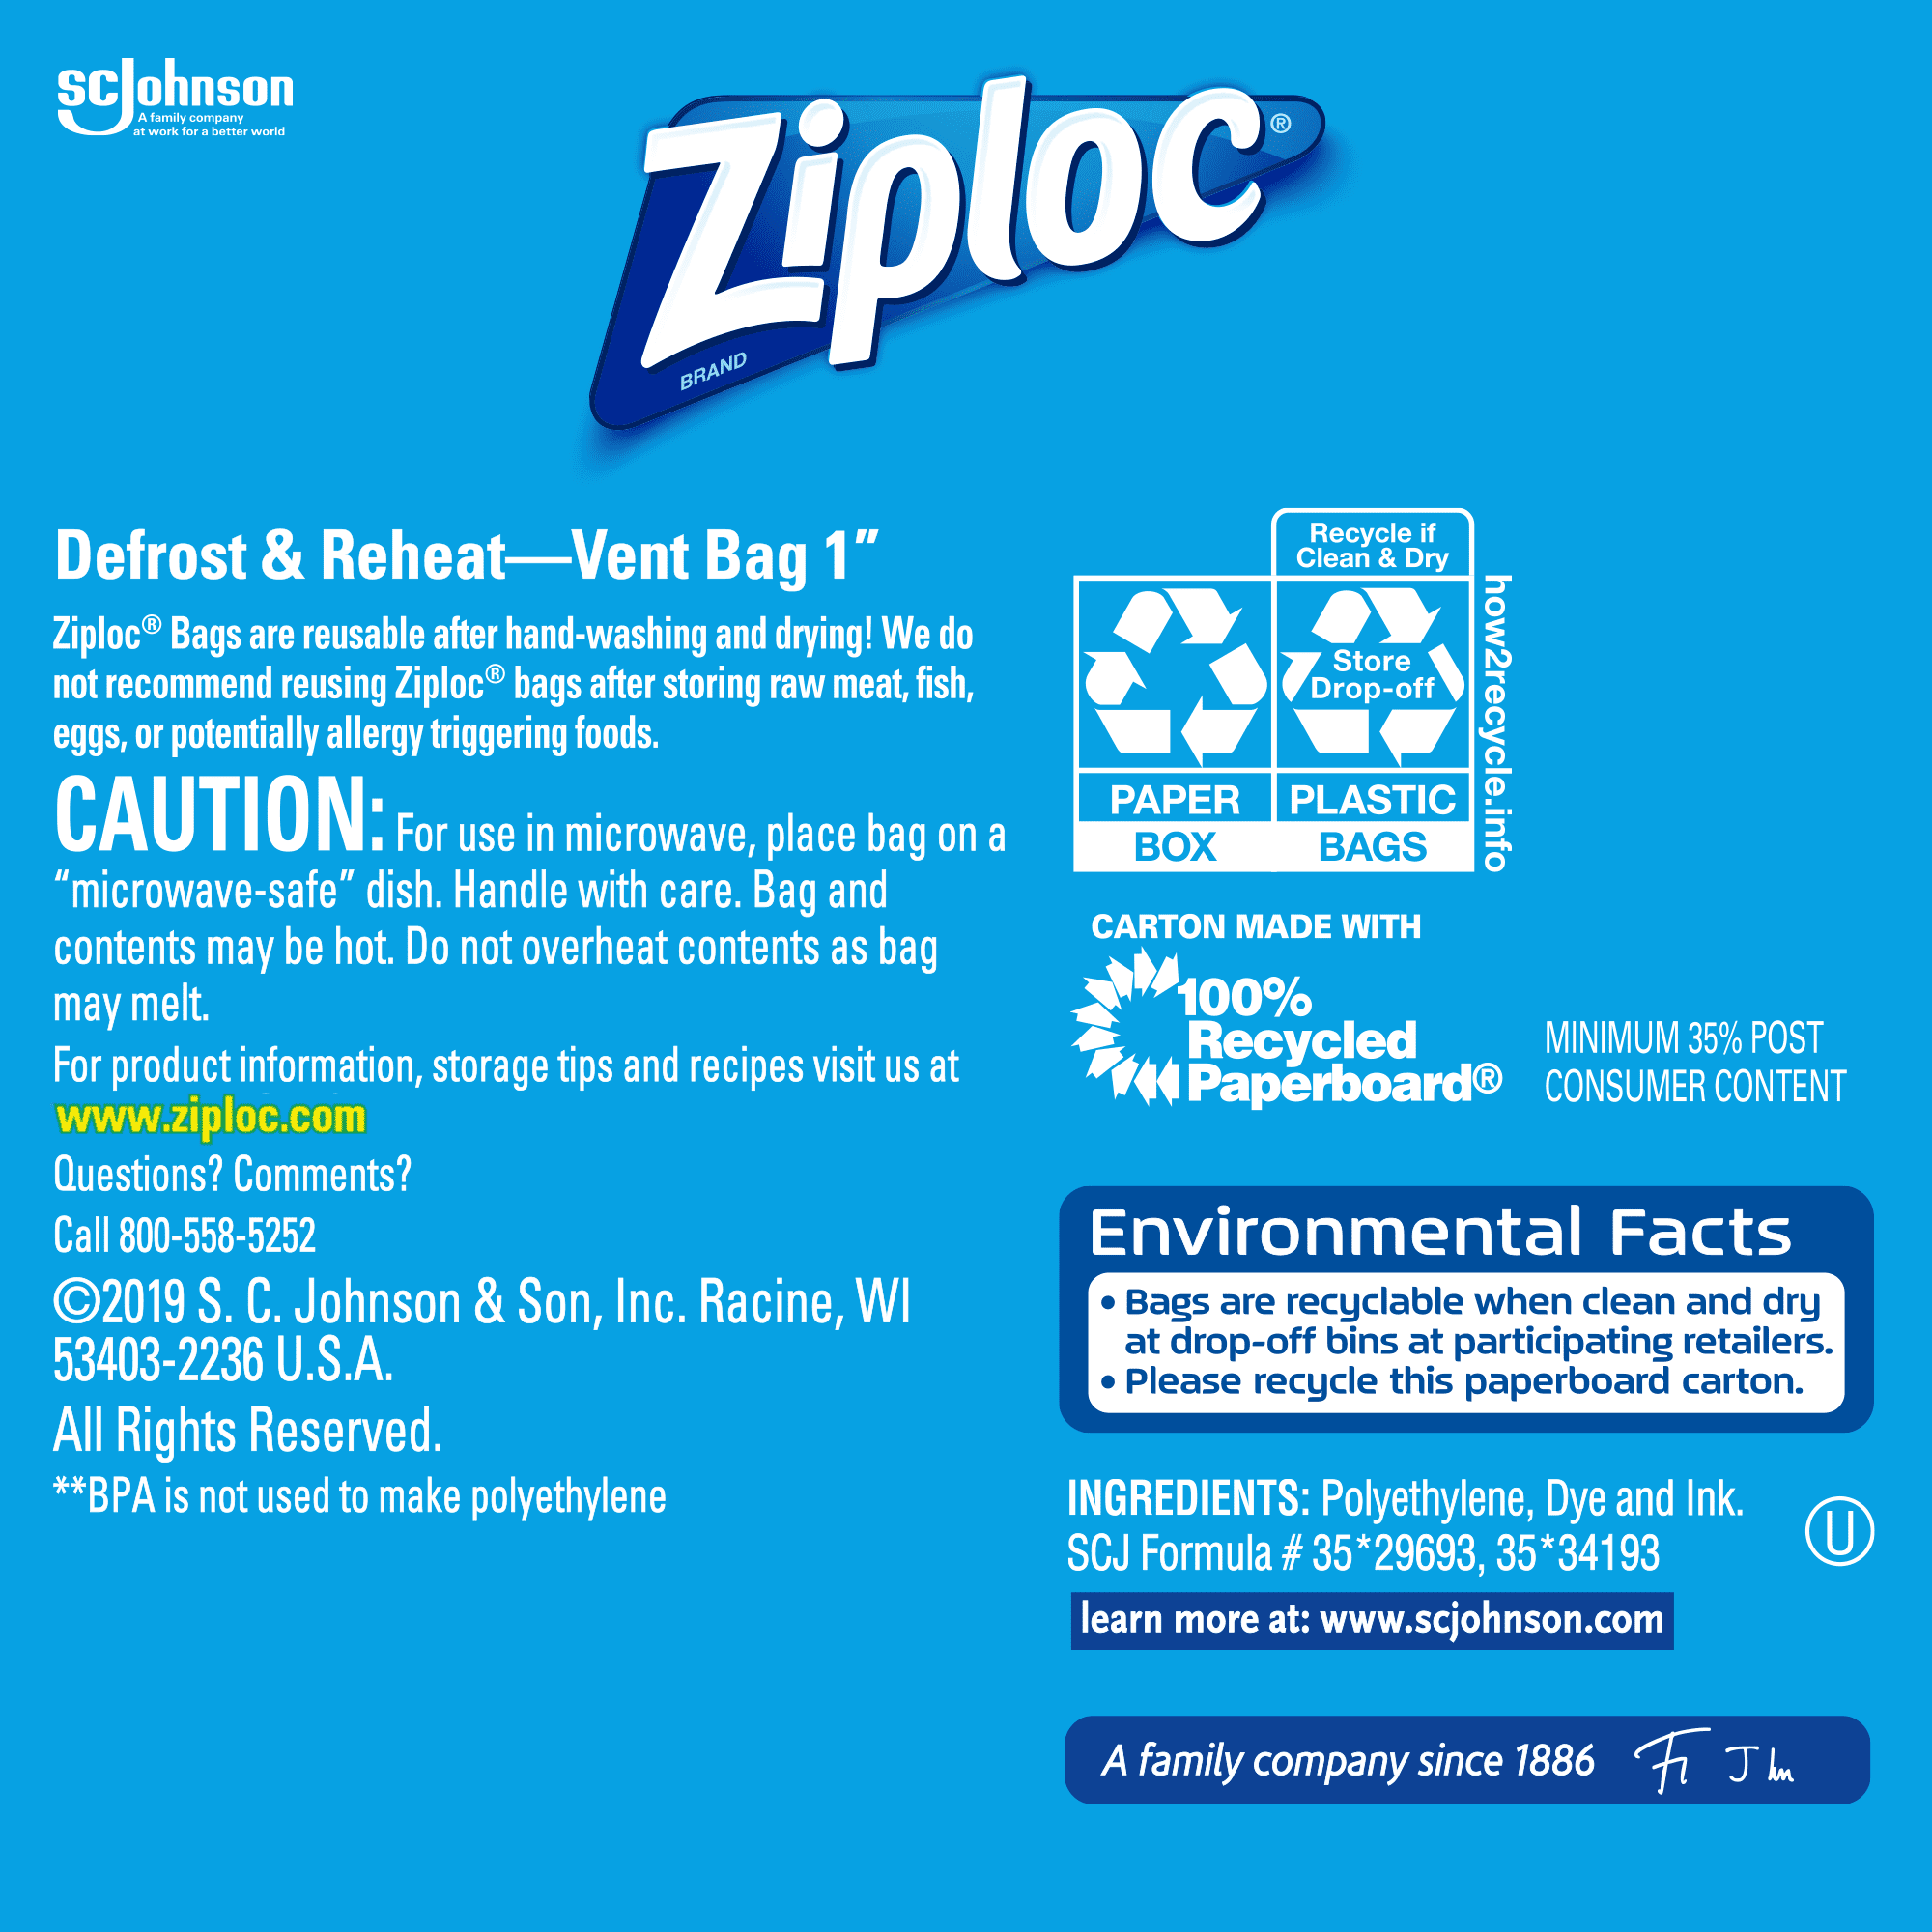 Can Ziploc Bags Go In The Microwave Ziploc Brand Freezer Pint Bags With Grip N Seal Technology 20 Count Walmart Com Walmart Com